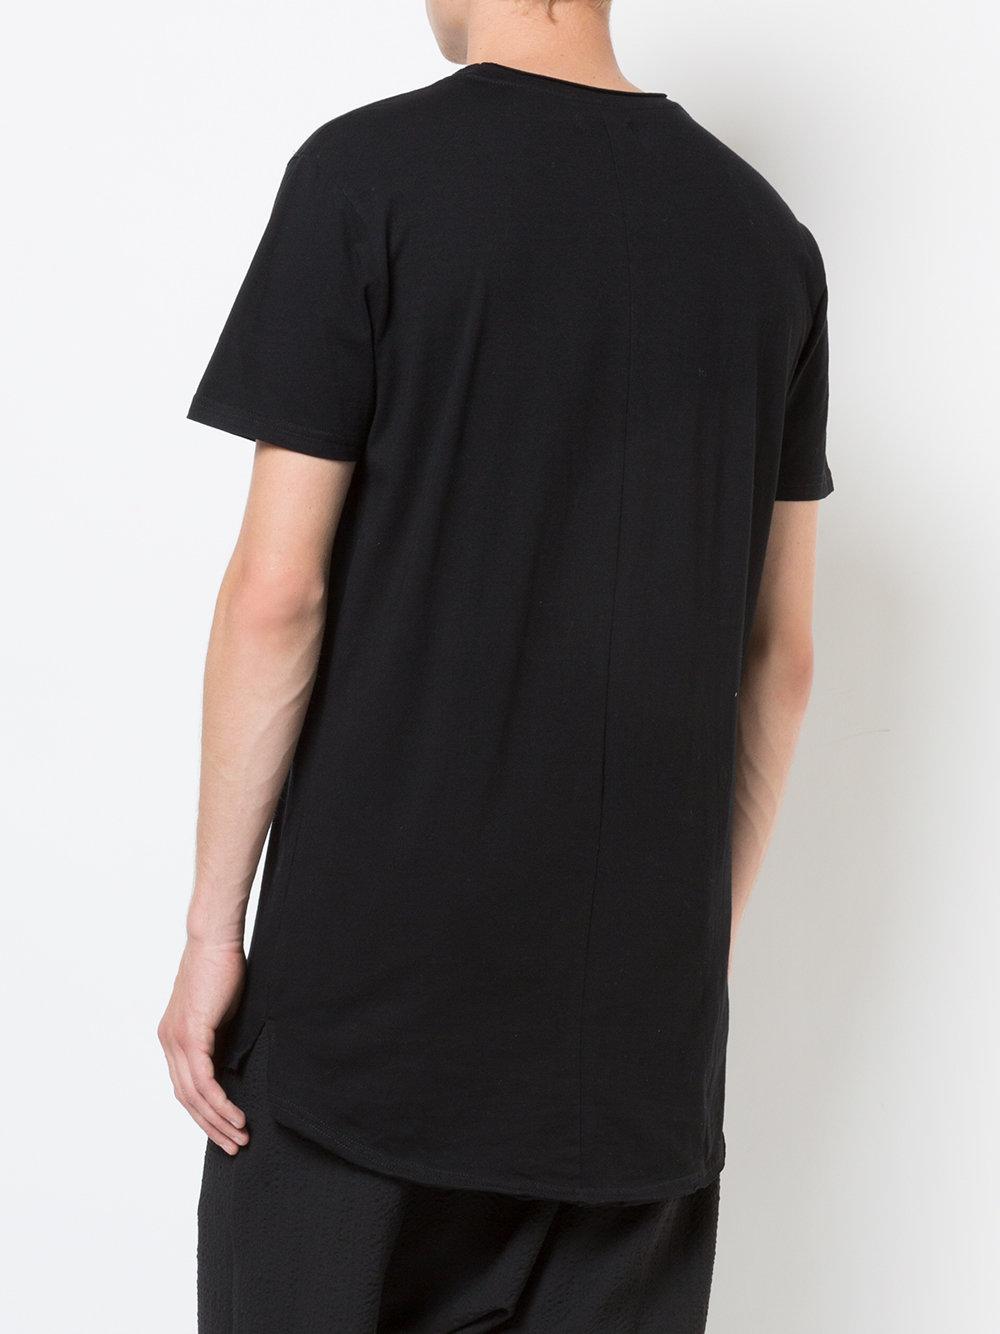 Vitaly Cotton Fishtail T-shirt in Black for Men - Lyst